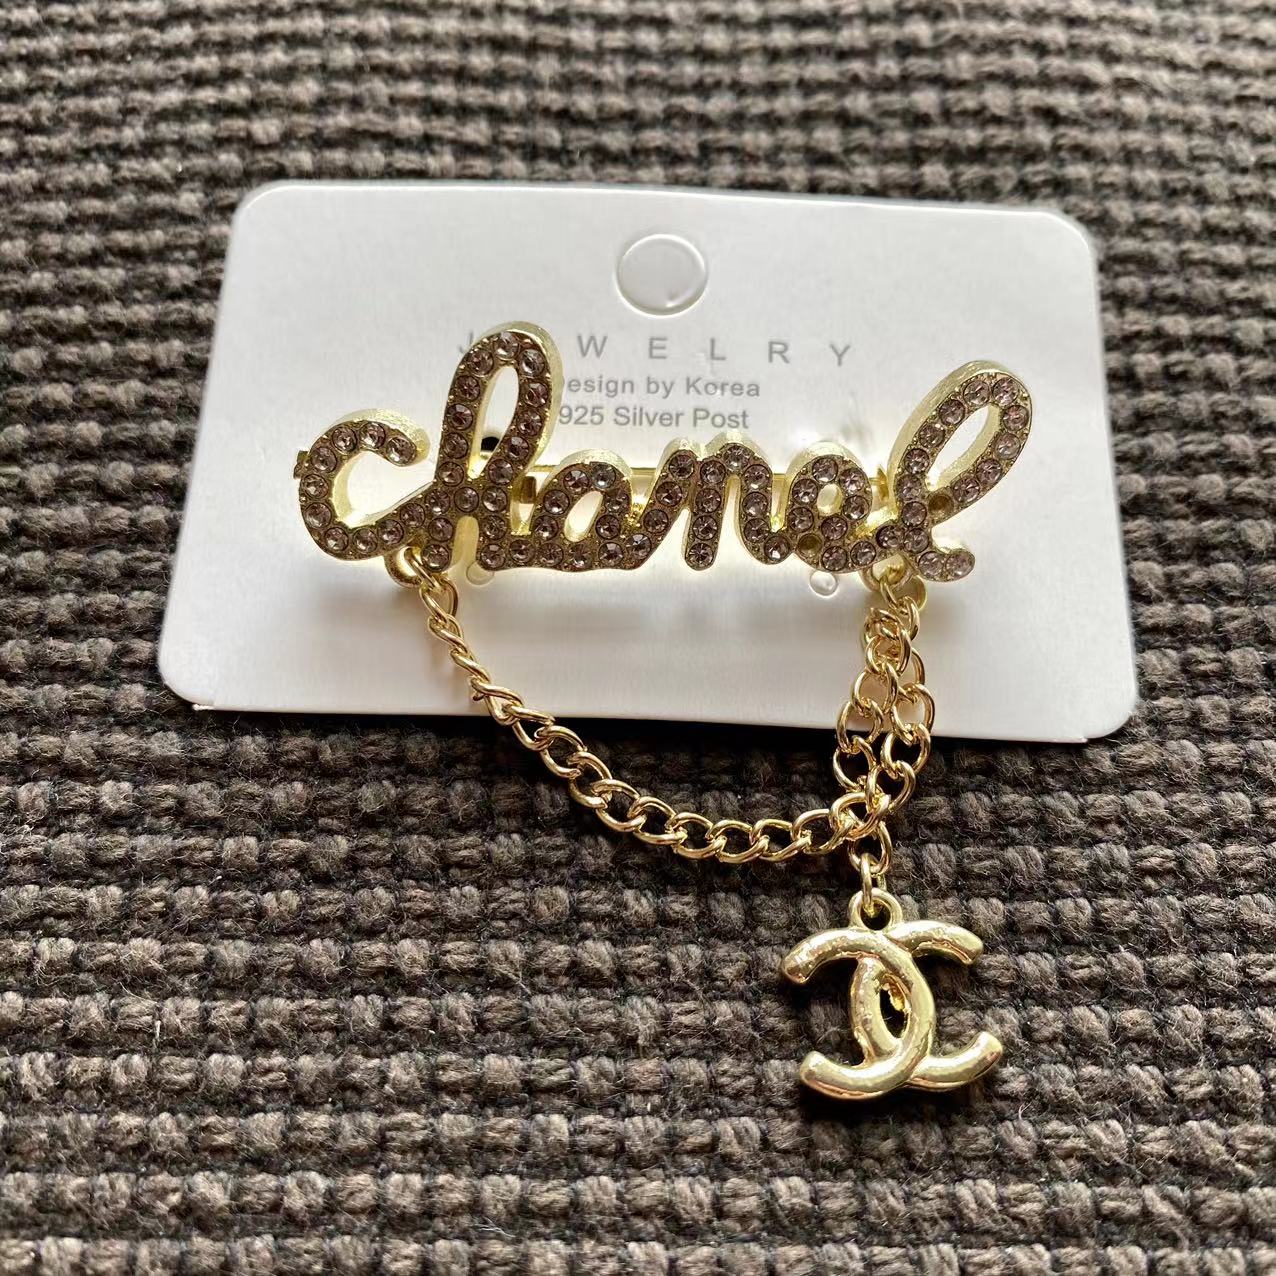 Big sale! New Chanel brooch